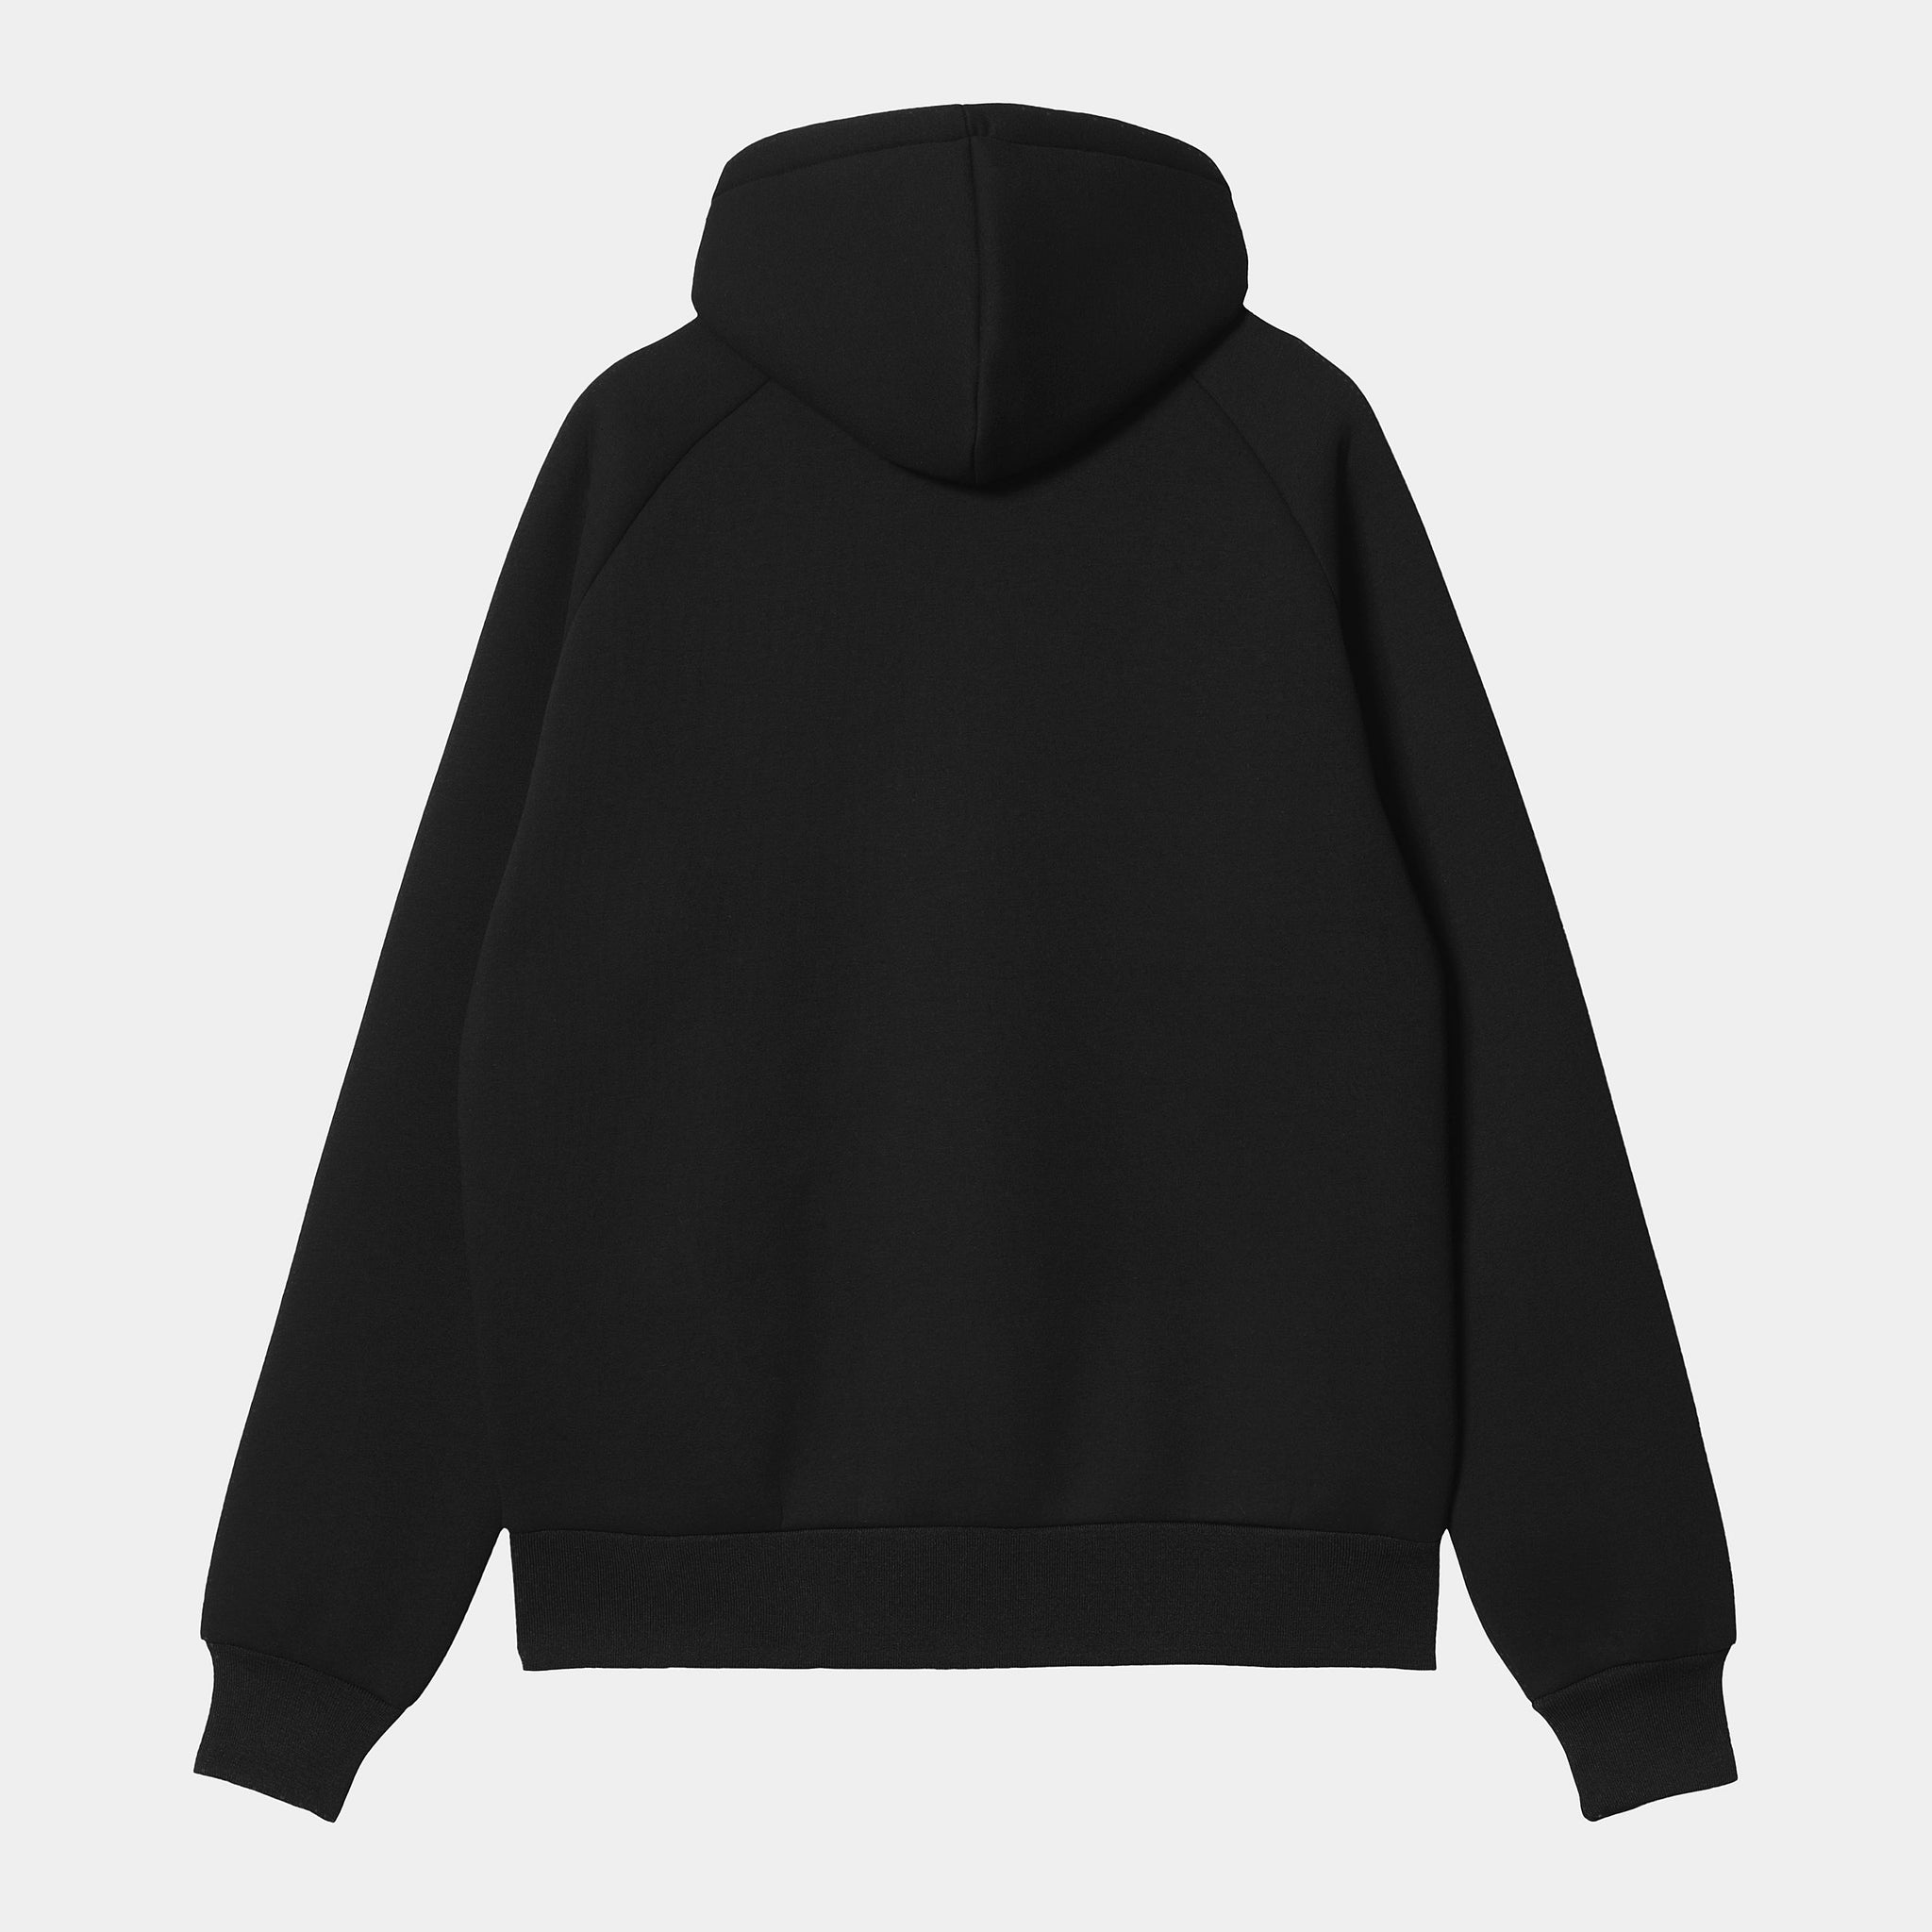 Car-Lux Hooded Jacket (Black/Grey)